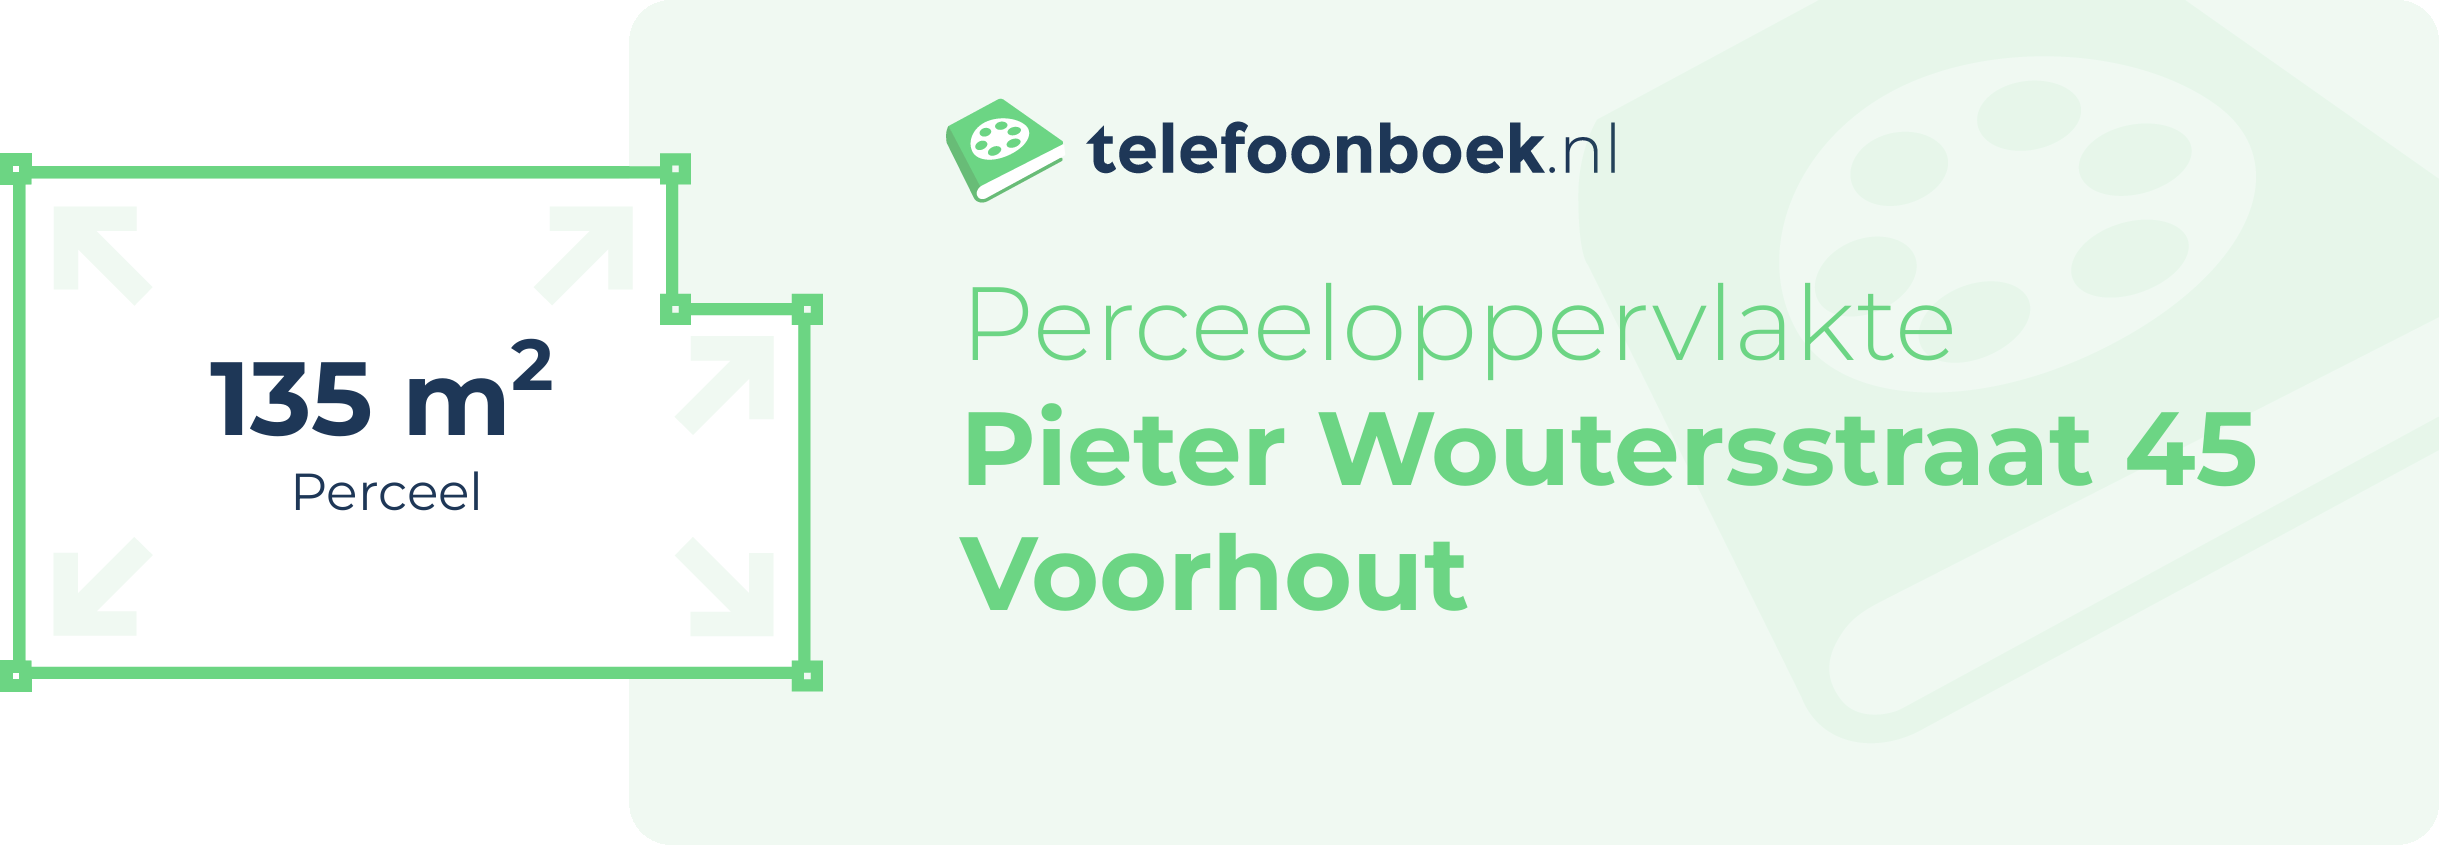 Perceeloppervlakte Pieter Woutersstraat 45 Voorhout